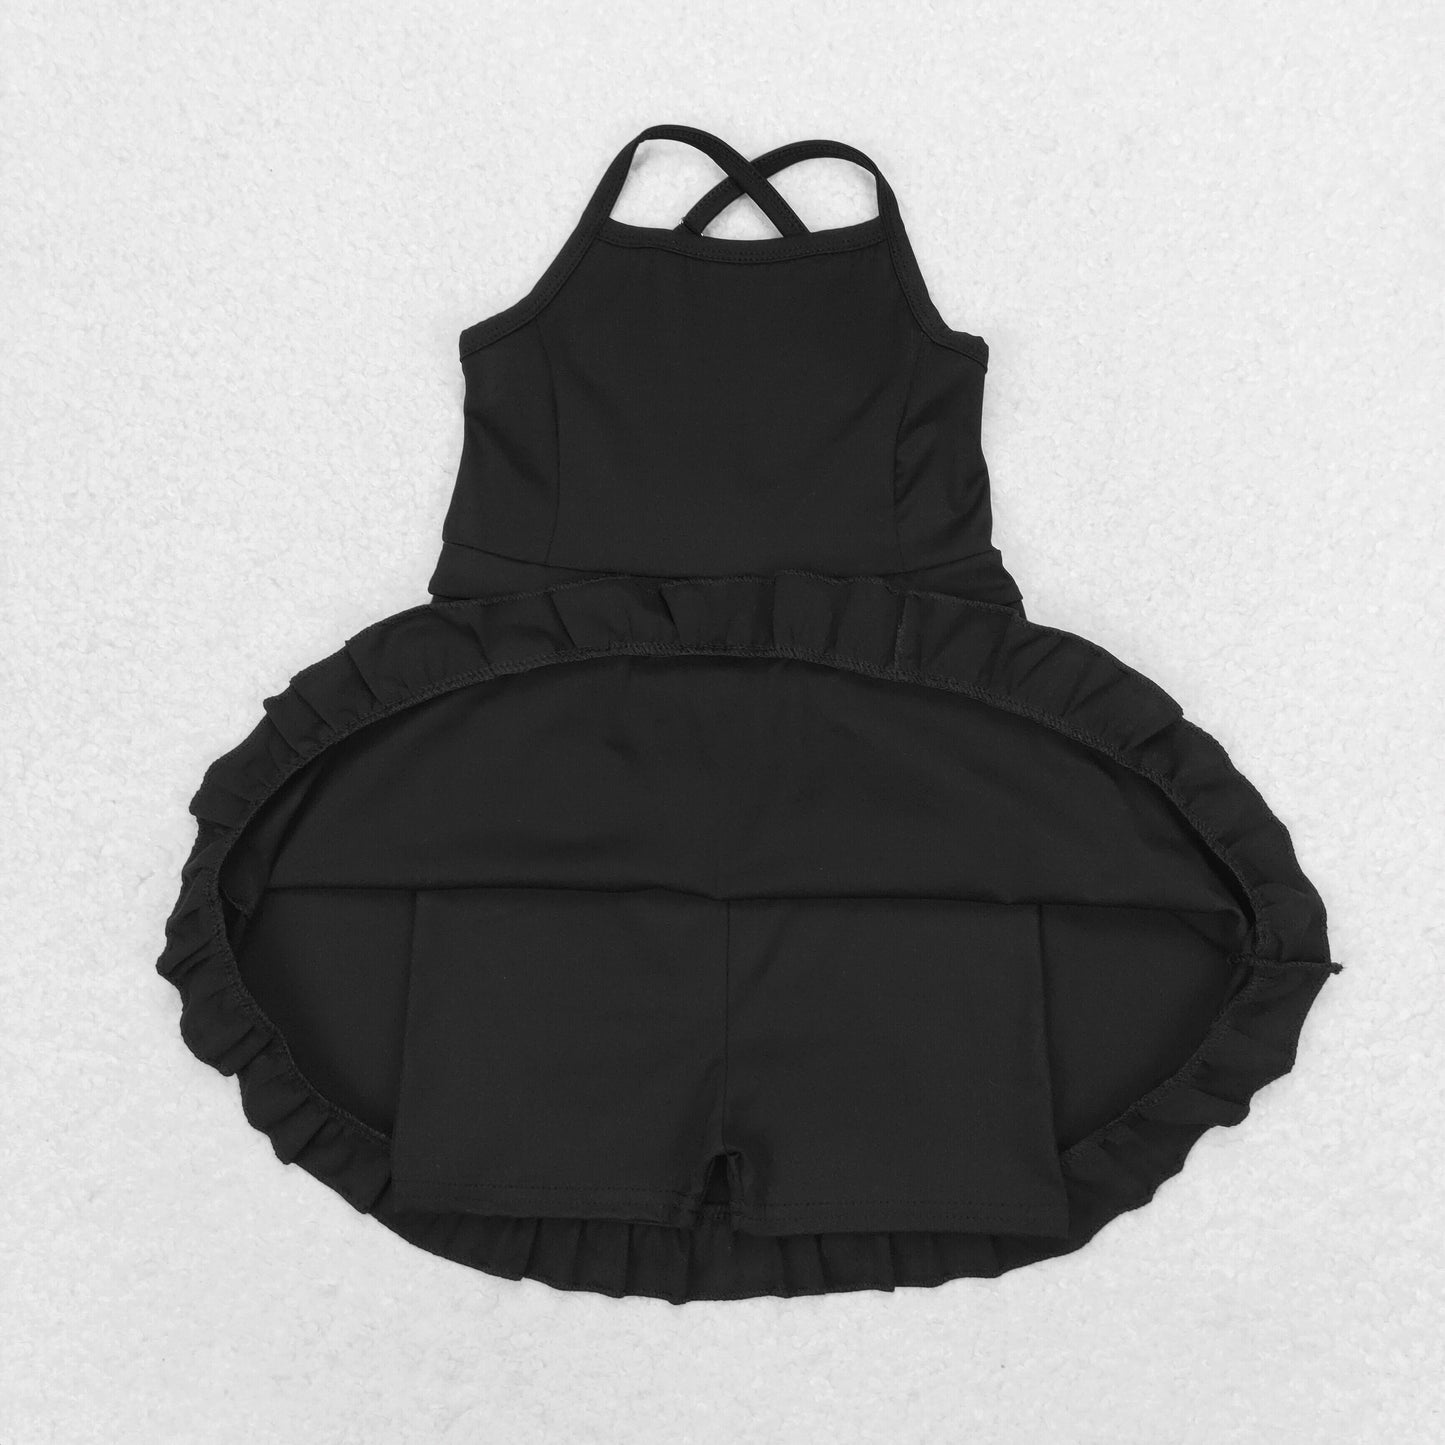 rts no moq S0446 solid black sportswear skirt swimsuit